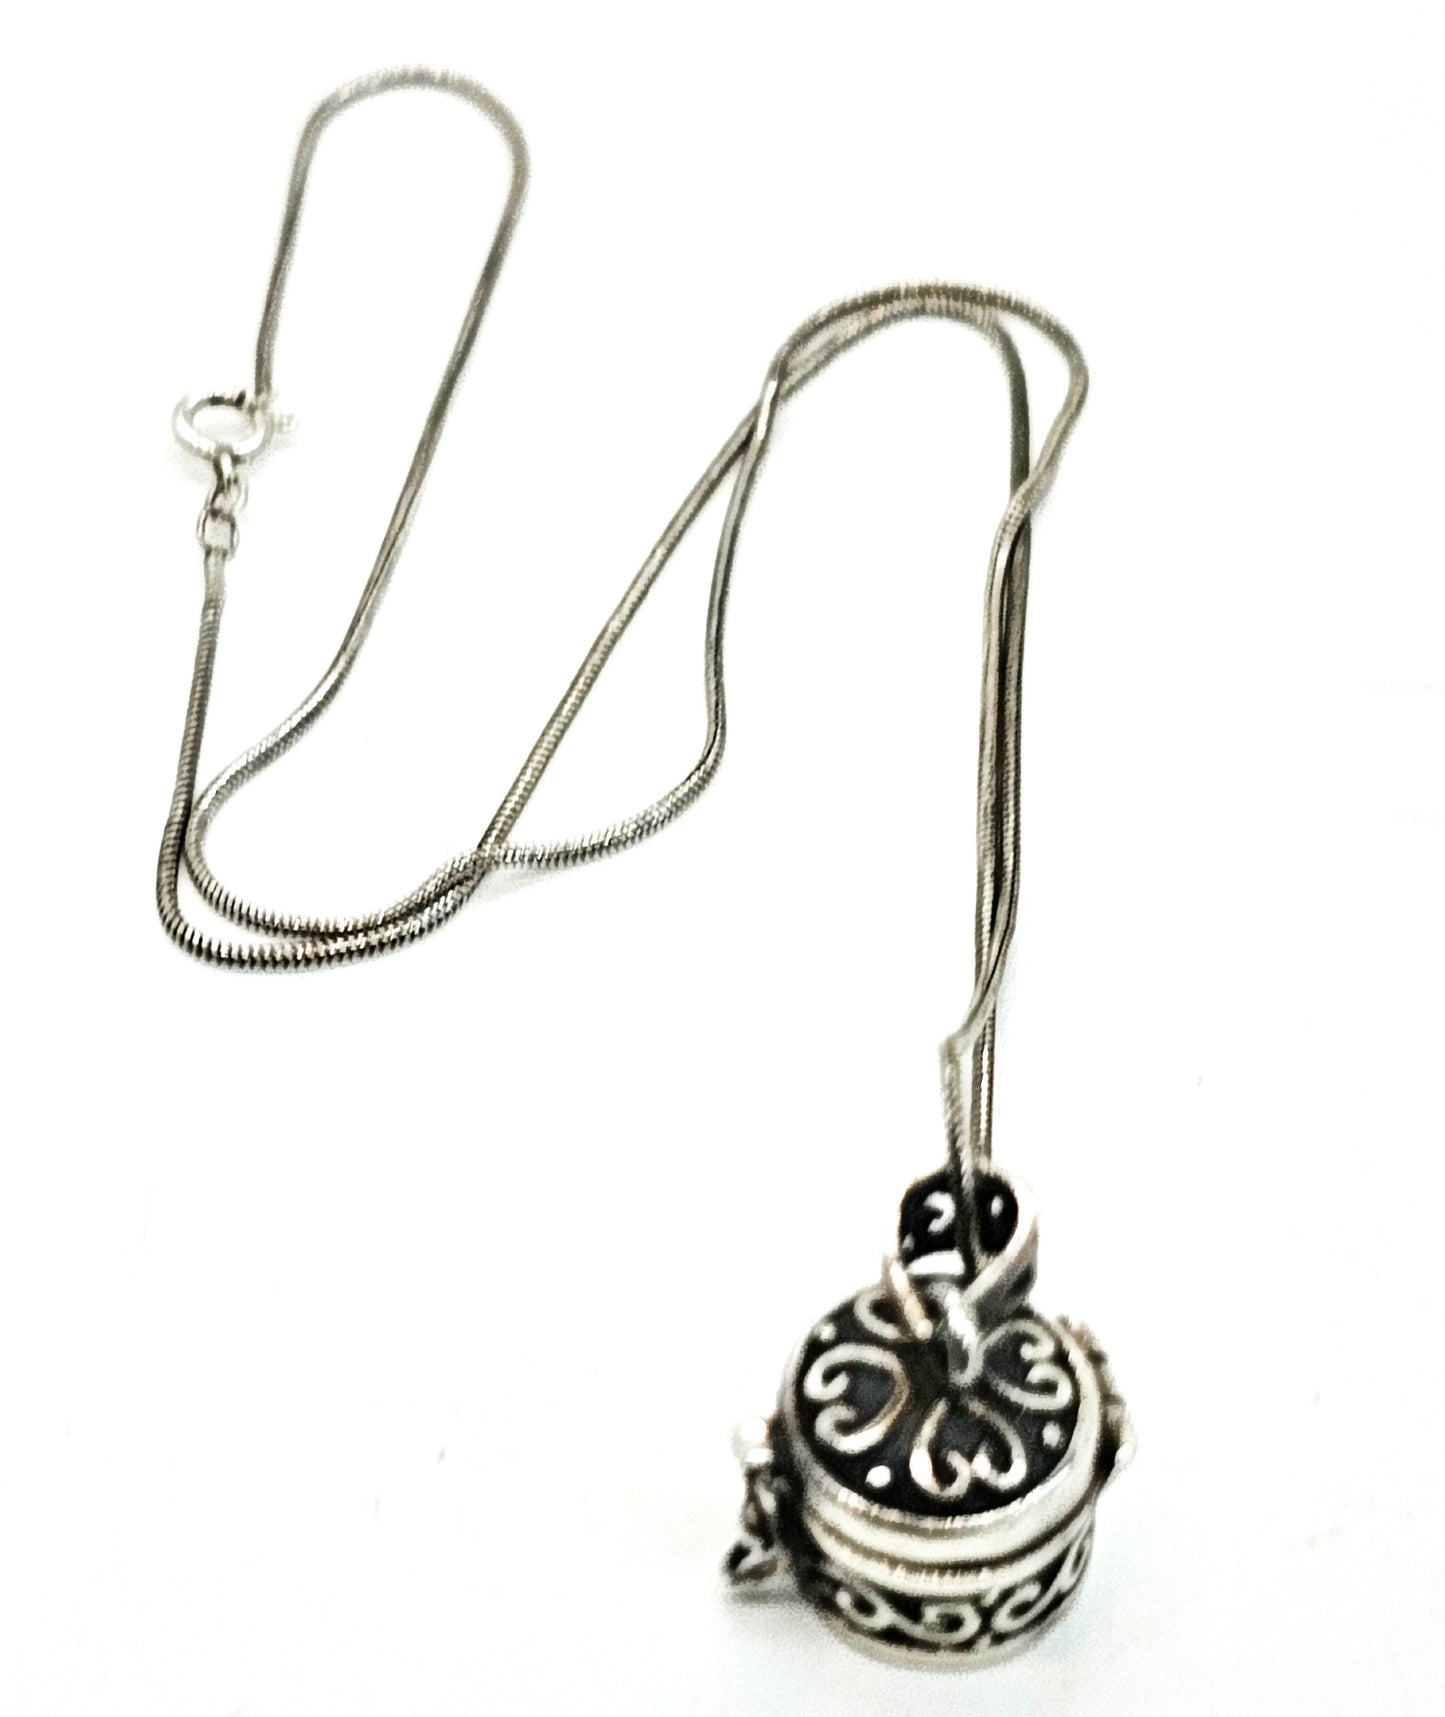 Prayer box small opening poison keepsake sterling silver pendant necklace